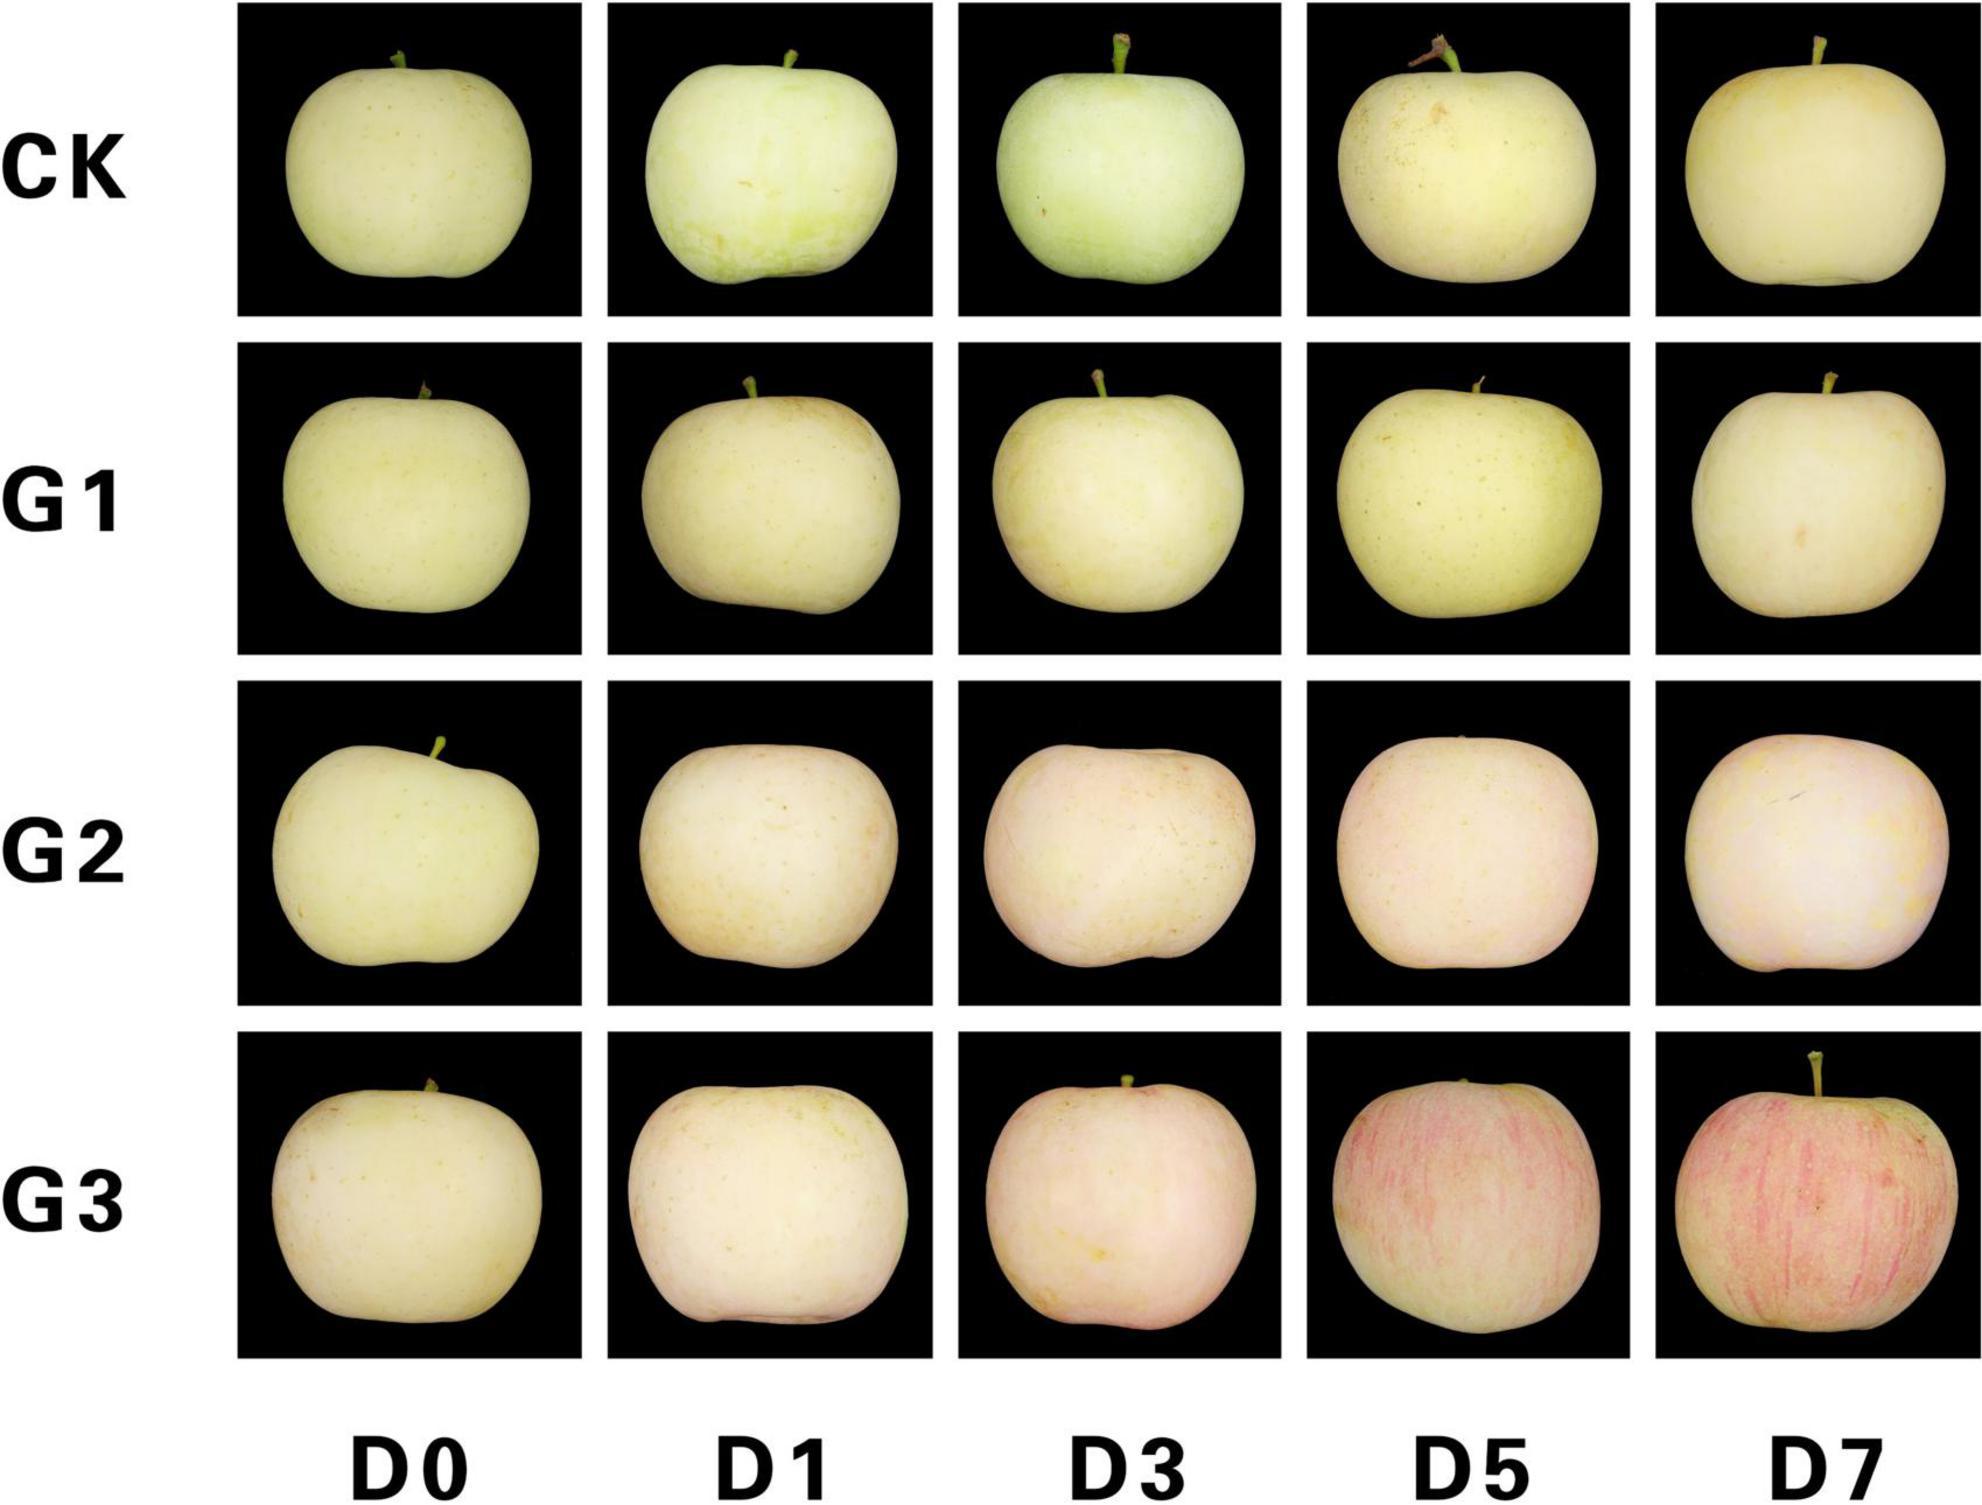 Researchers Sequence Genome of Honeycrisp Apple Cultivar